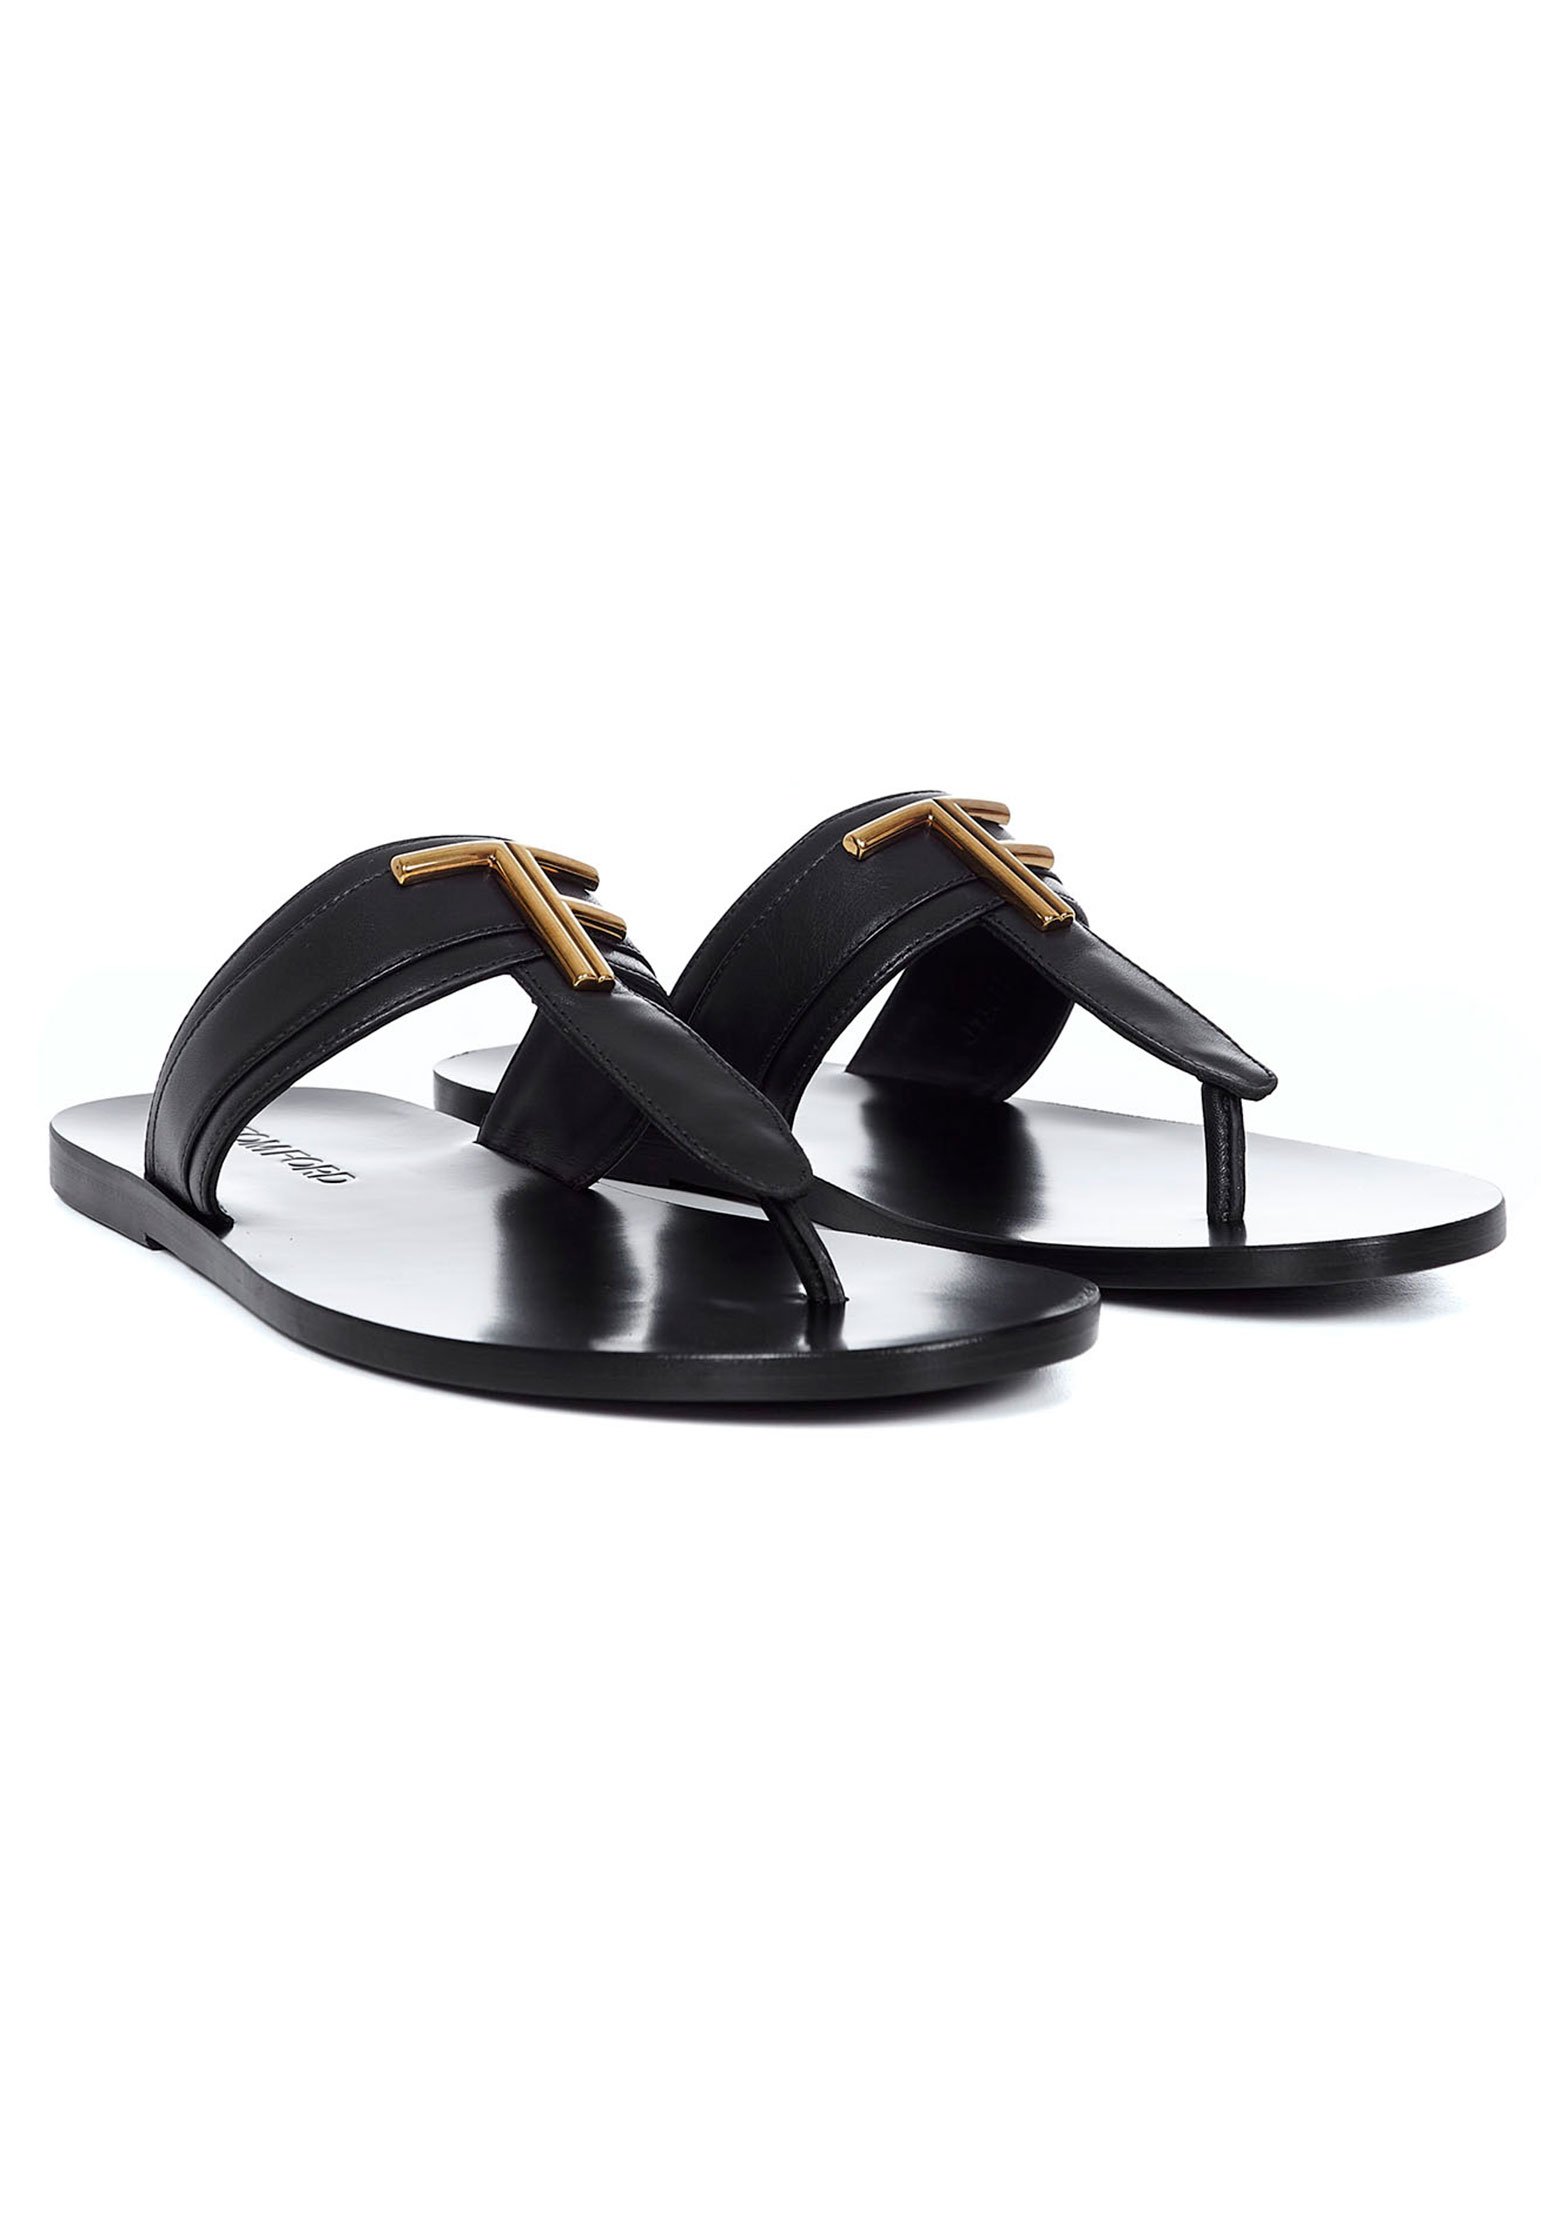 Sandals TOM FORD Color: black (Code: 373) in online store Allure